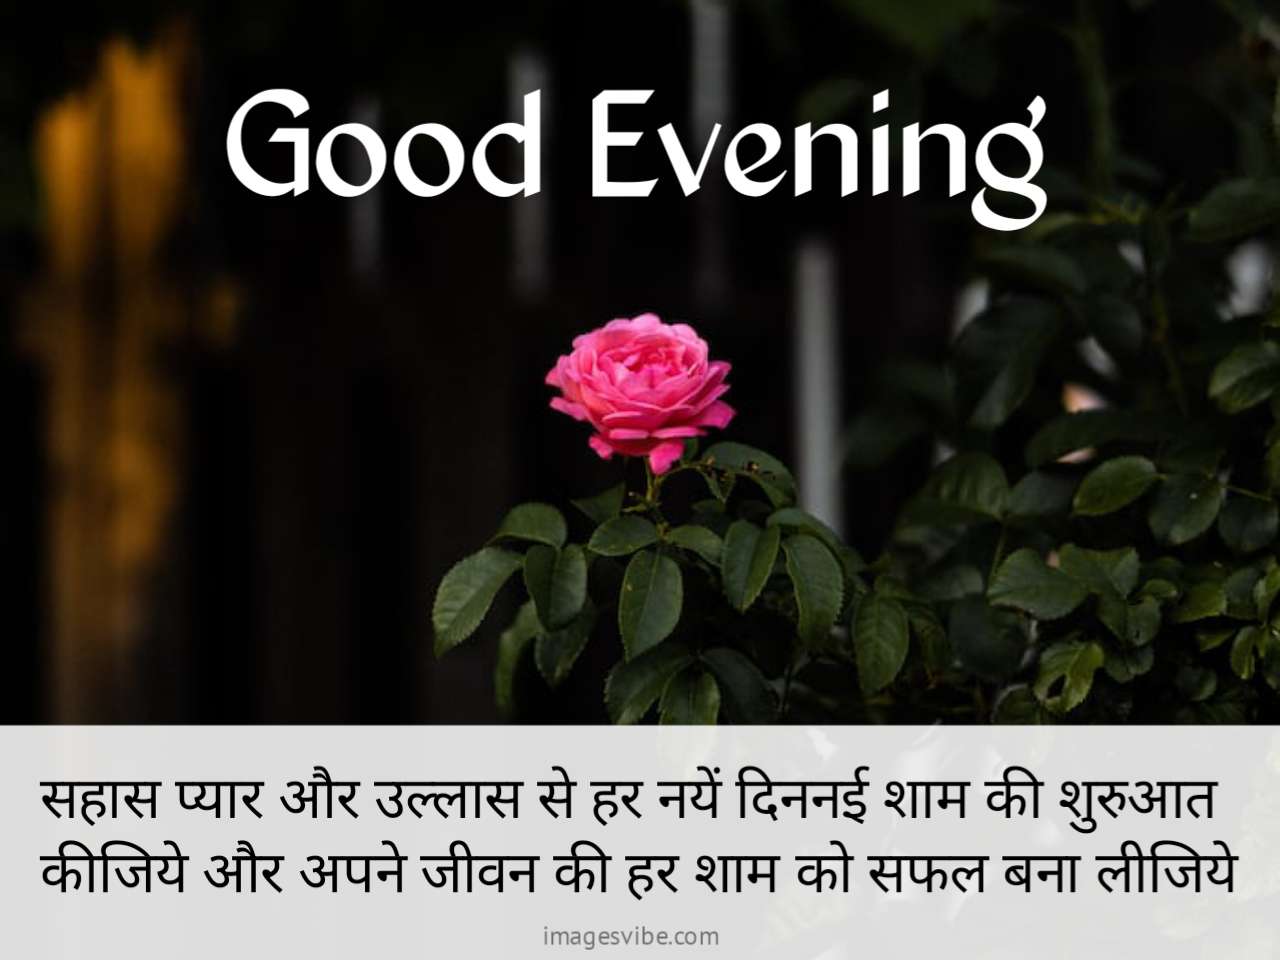 Good Evening Hindi Images